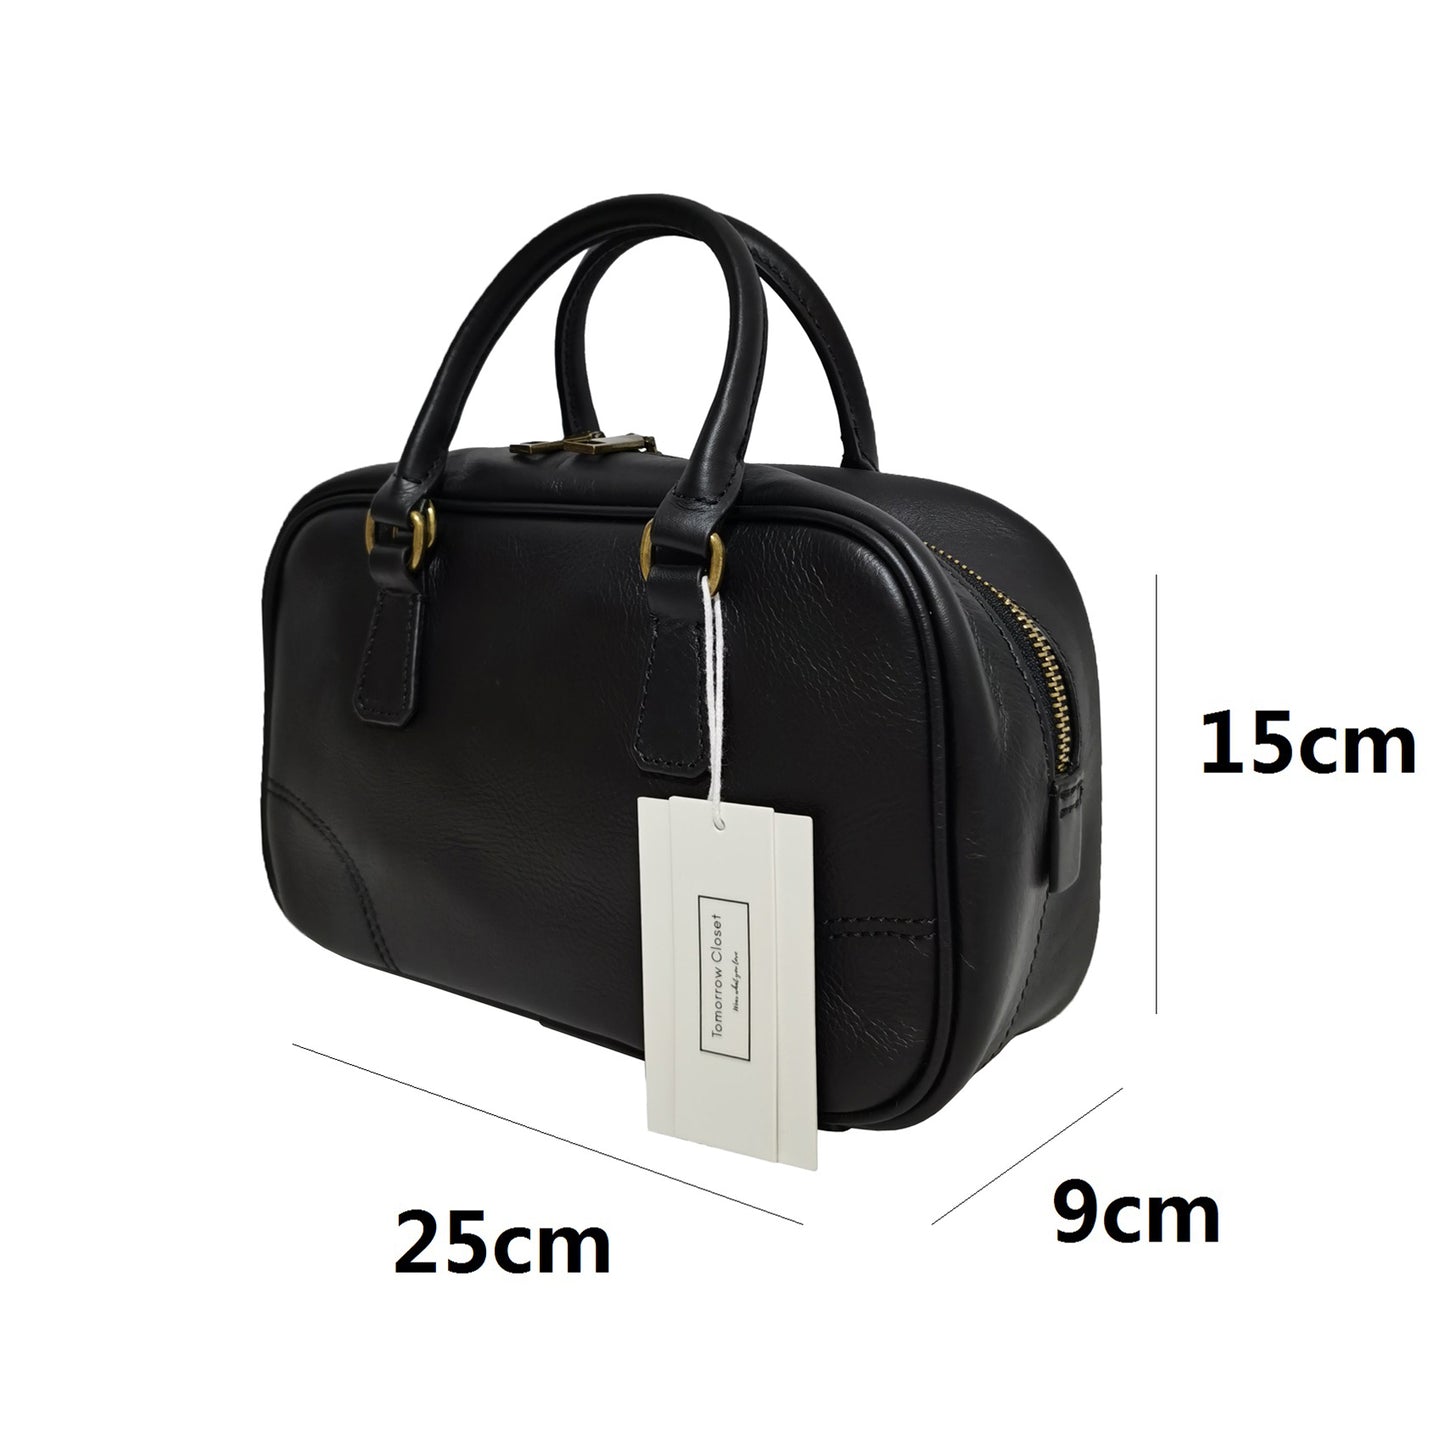 Women's genuine cowhide leather handbag Palour V2 design